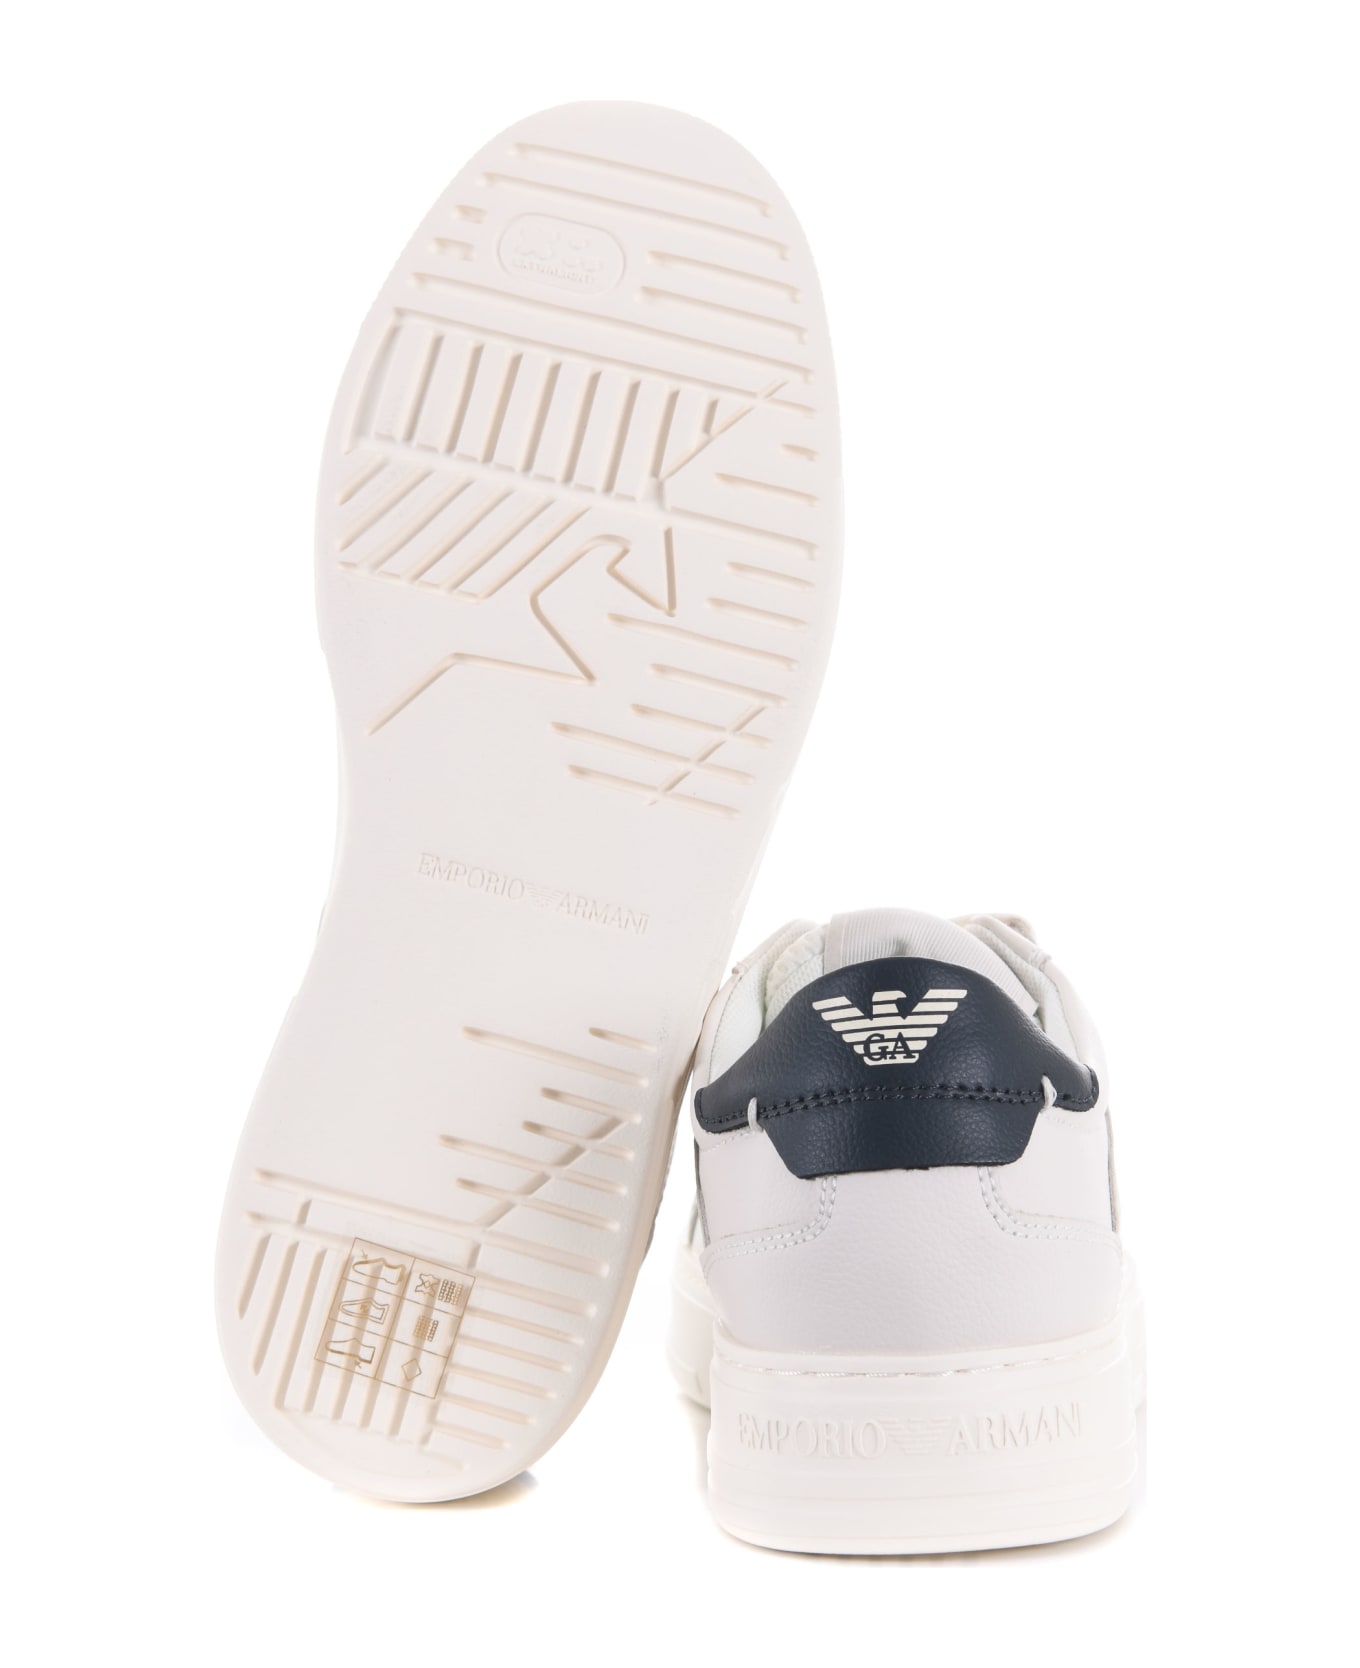 Emporio Armani Sneakers In Leather. - Avorio スニーカー